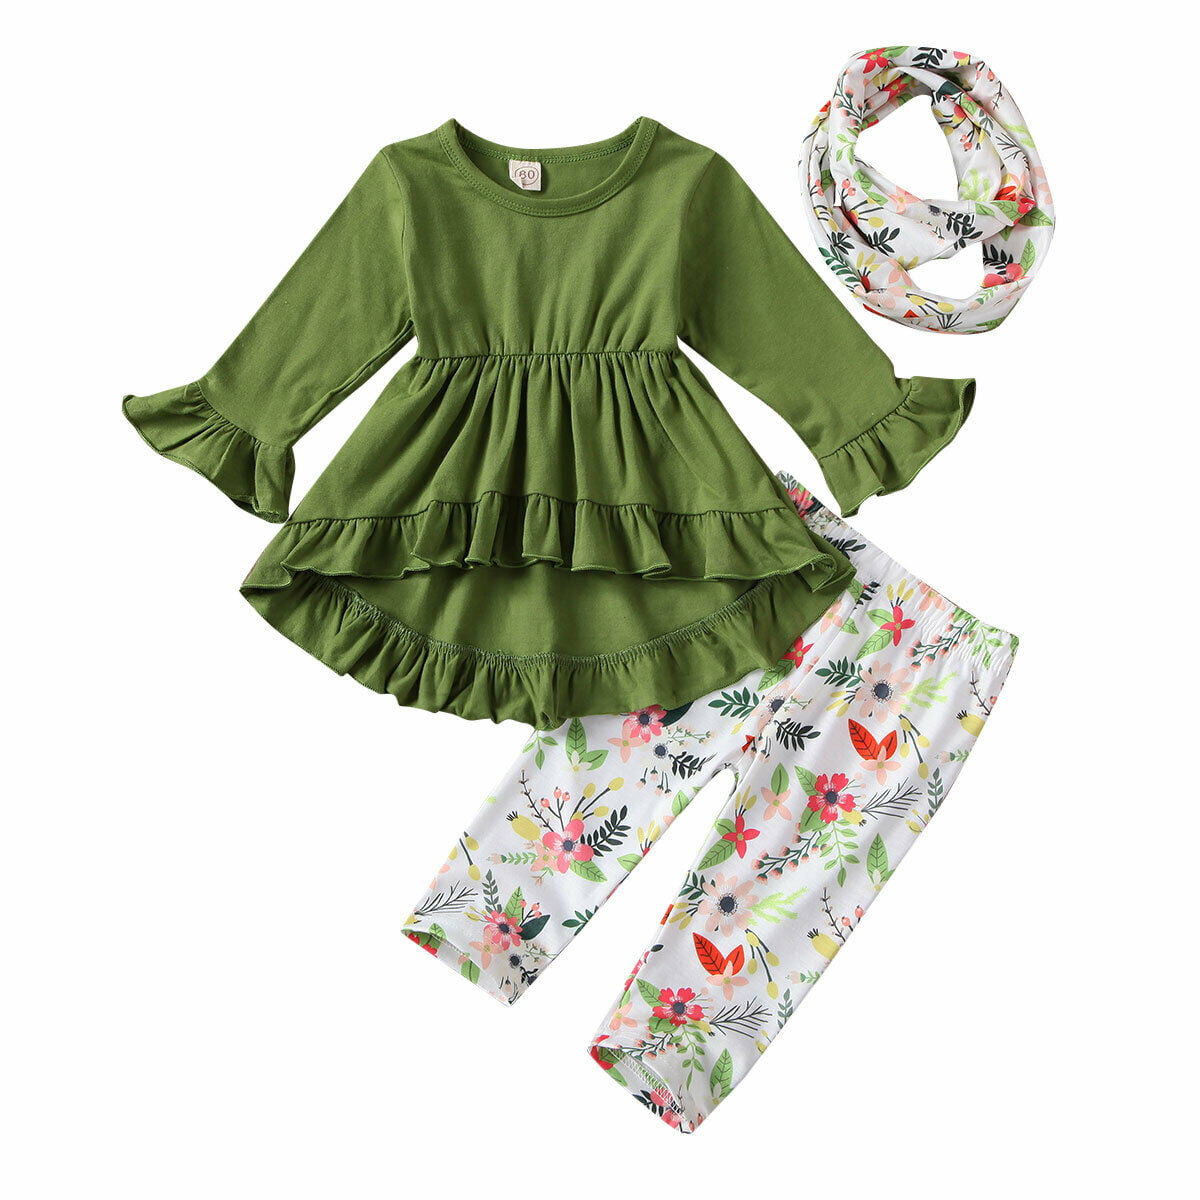 Infant Baby Girl Floral Print 3Pcs Outfit Short Sleeve Shirt Dress+Ruffle Shorts+Headband Set